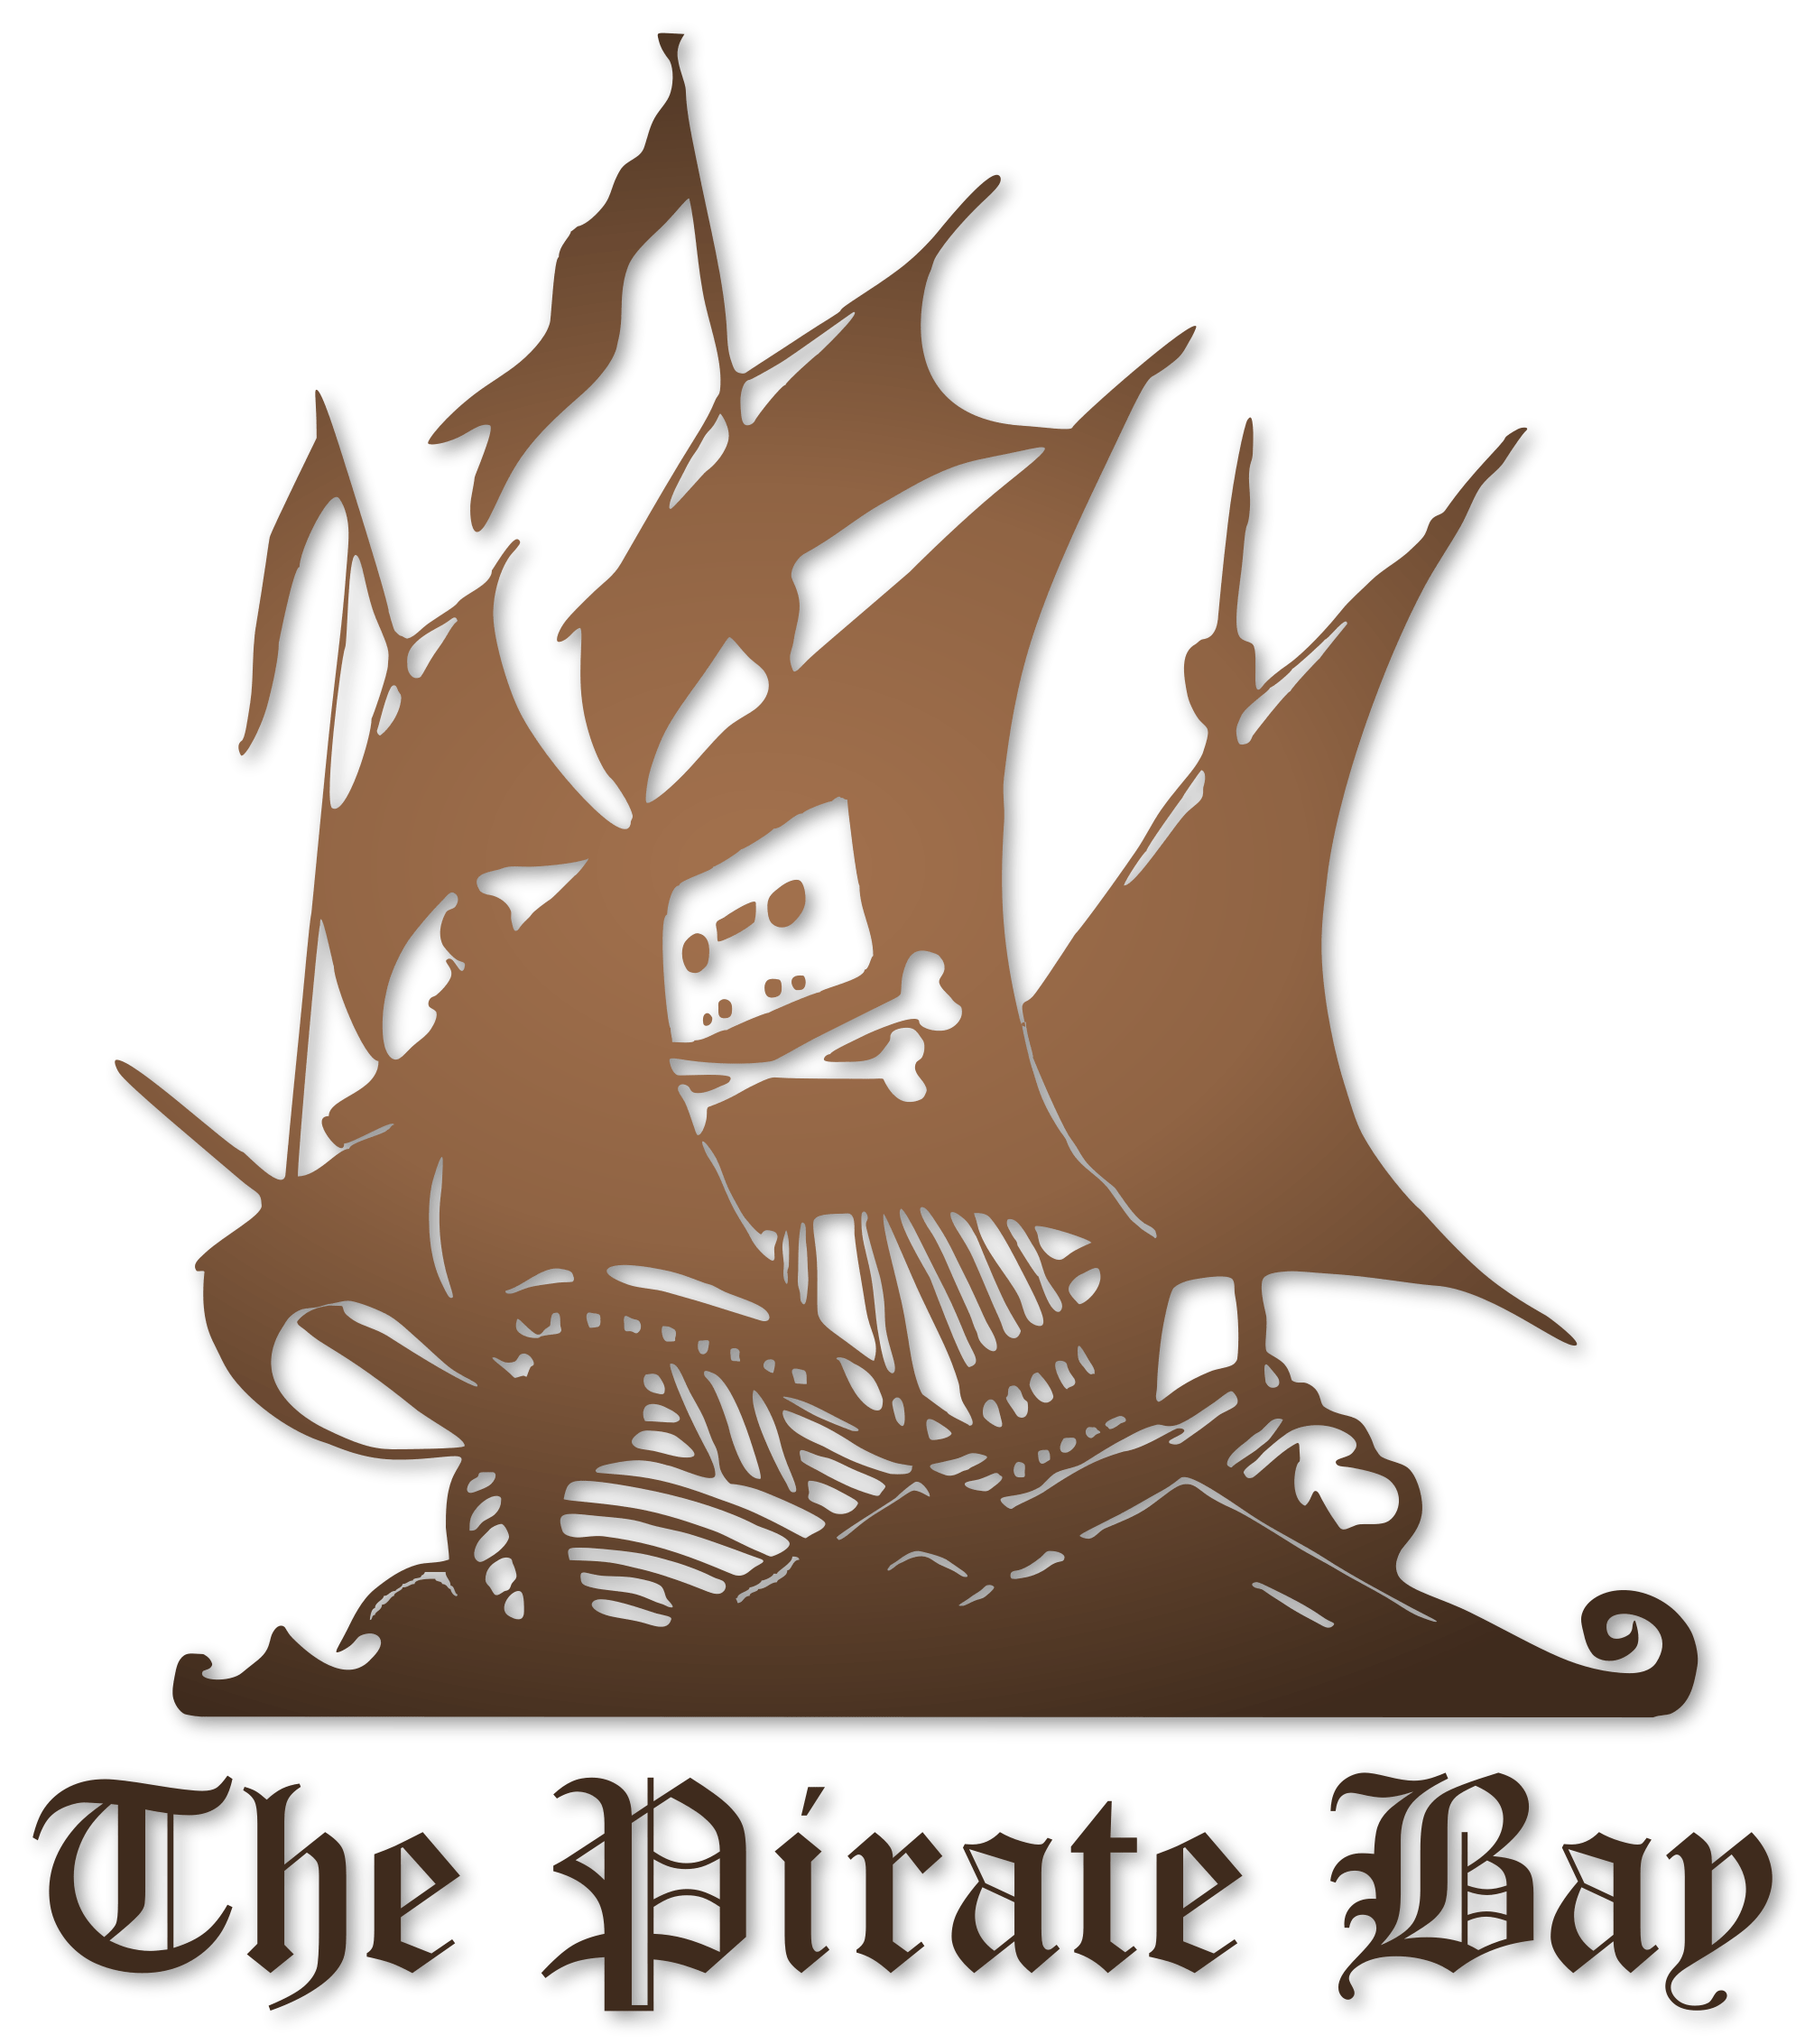 Piracy Logo - Copyright infringement